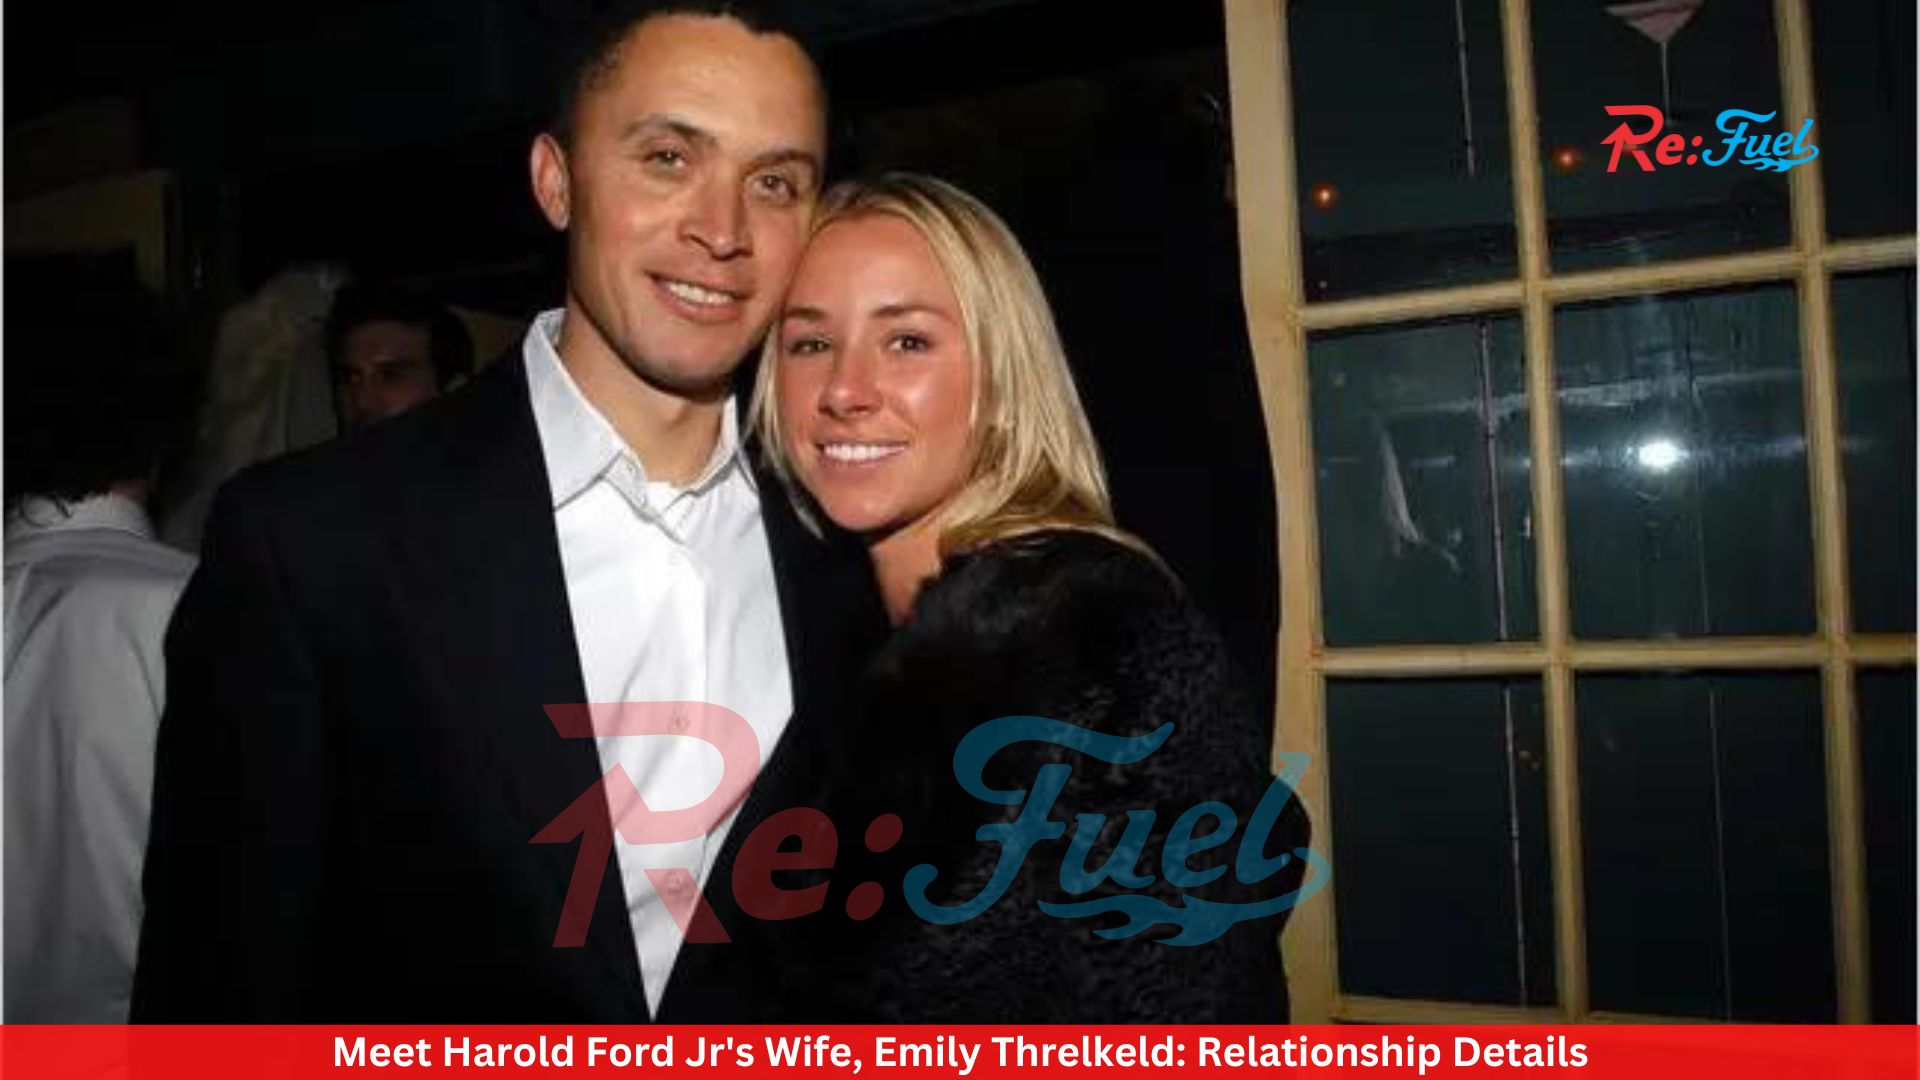 Meet Harold Ford Jr's Wife, Emily Threlkeld: Relationship Details